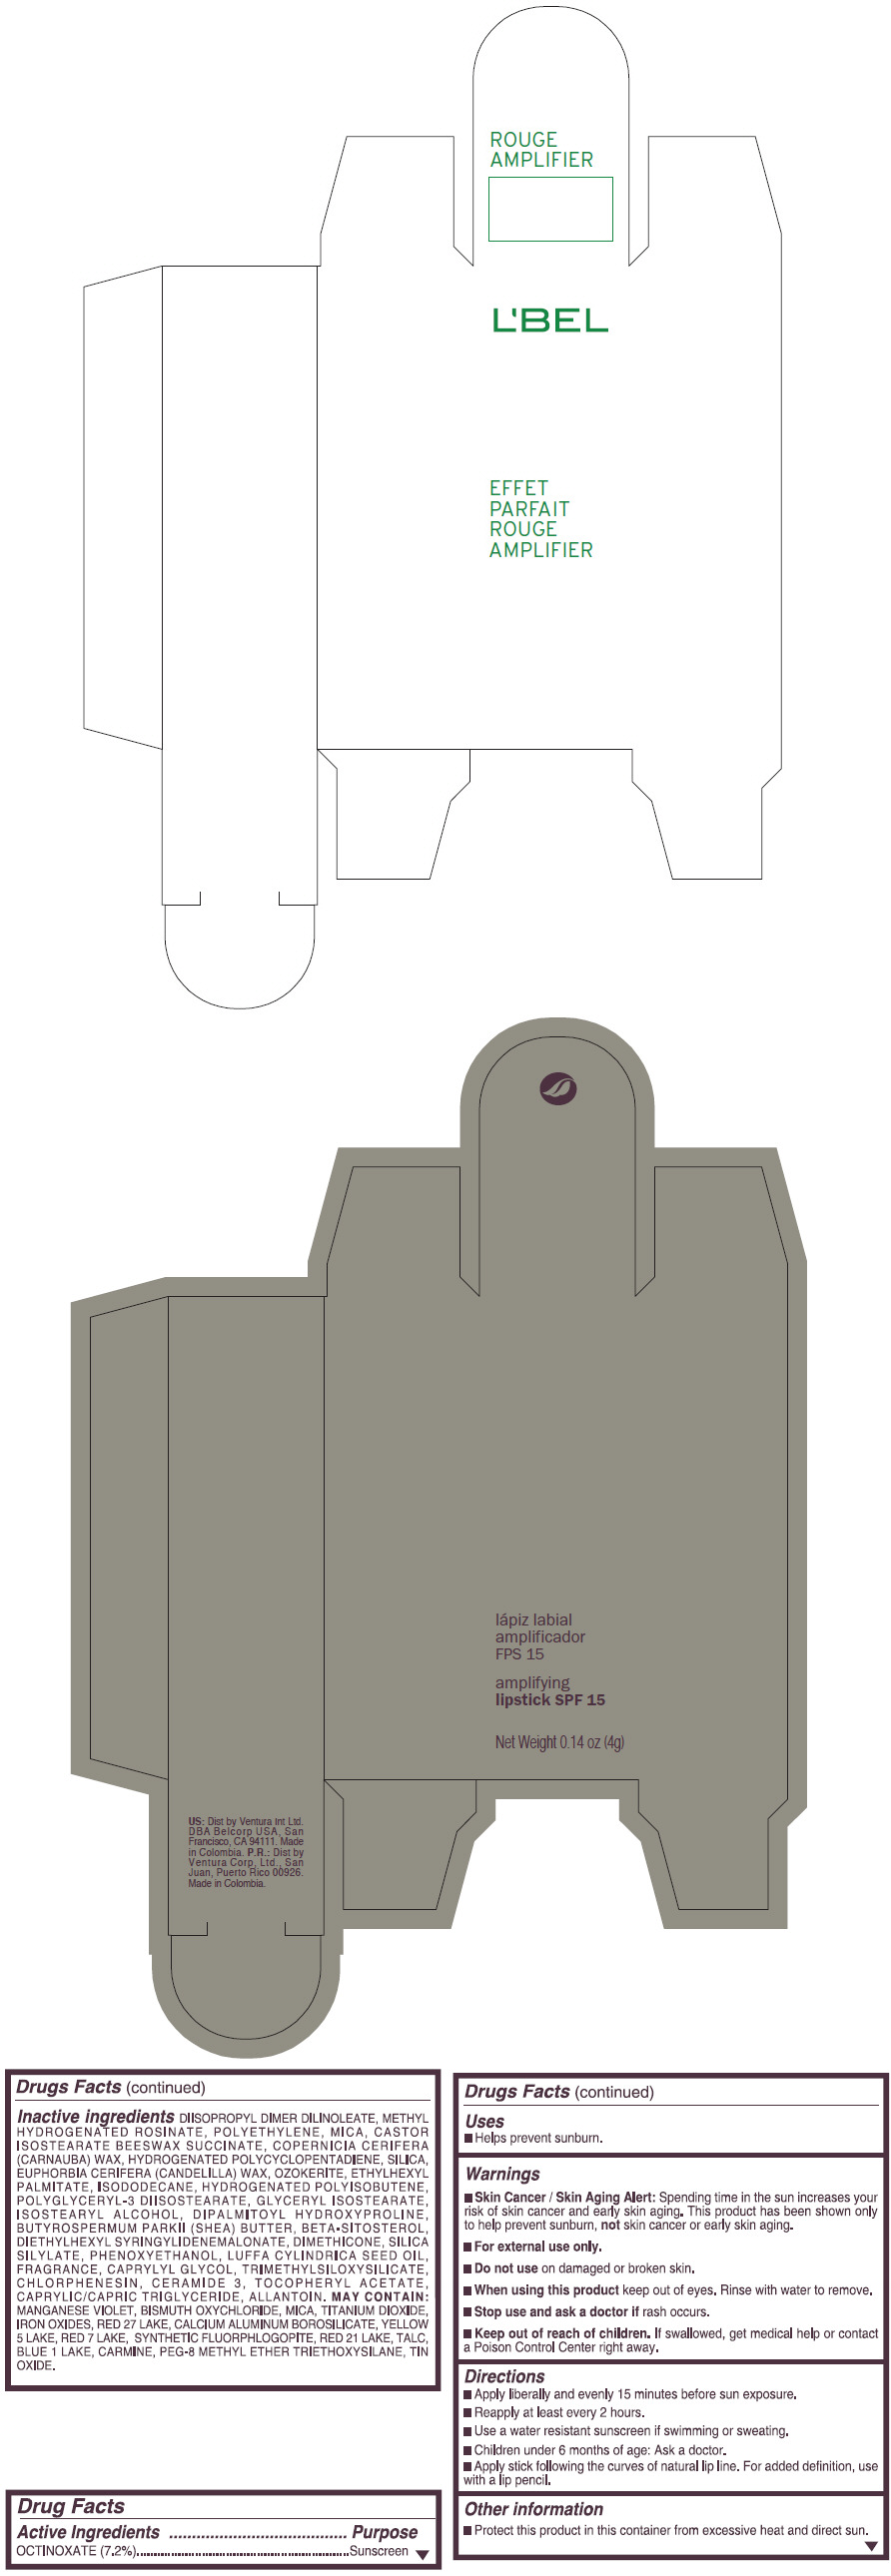 PRINCIPAL DISPLAY PANEL - 4 g Tube Box - (ROSE CHAMPAGNE) - PINK